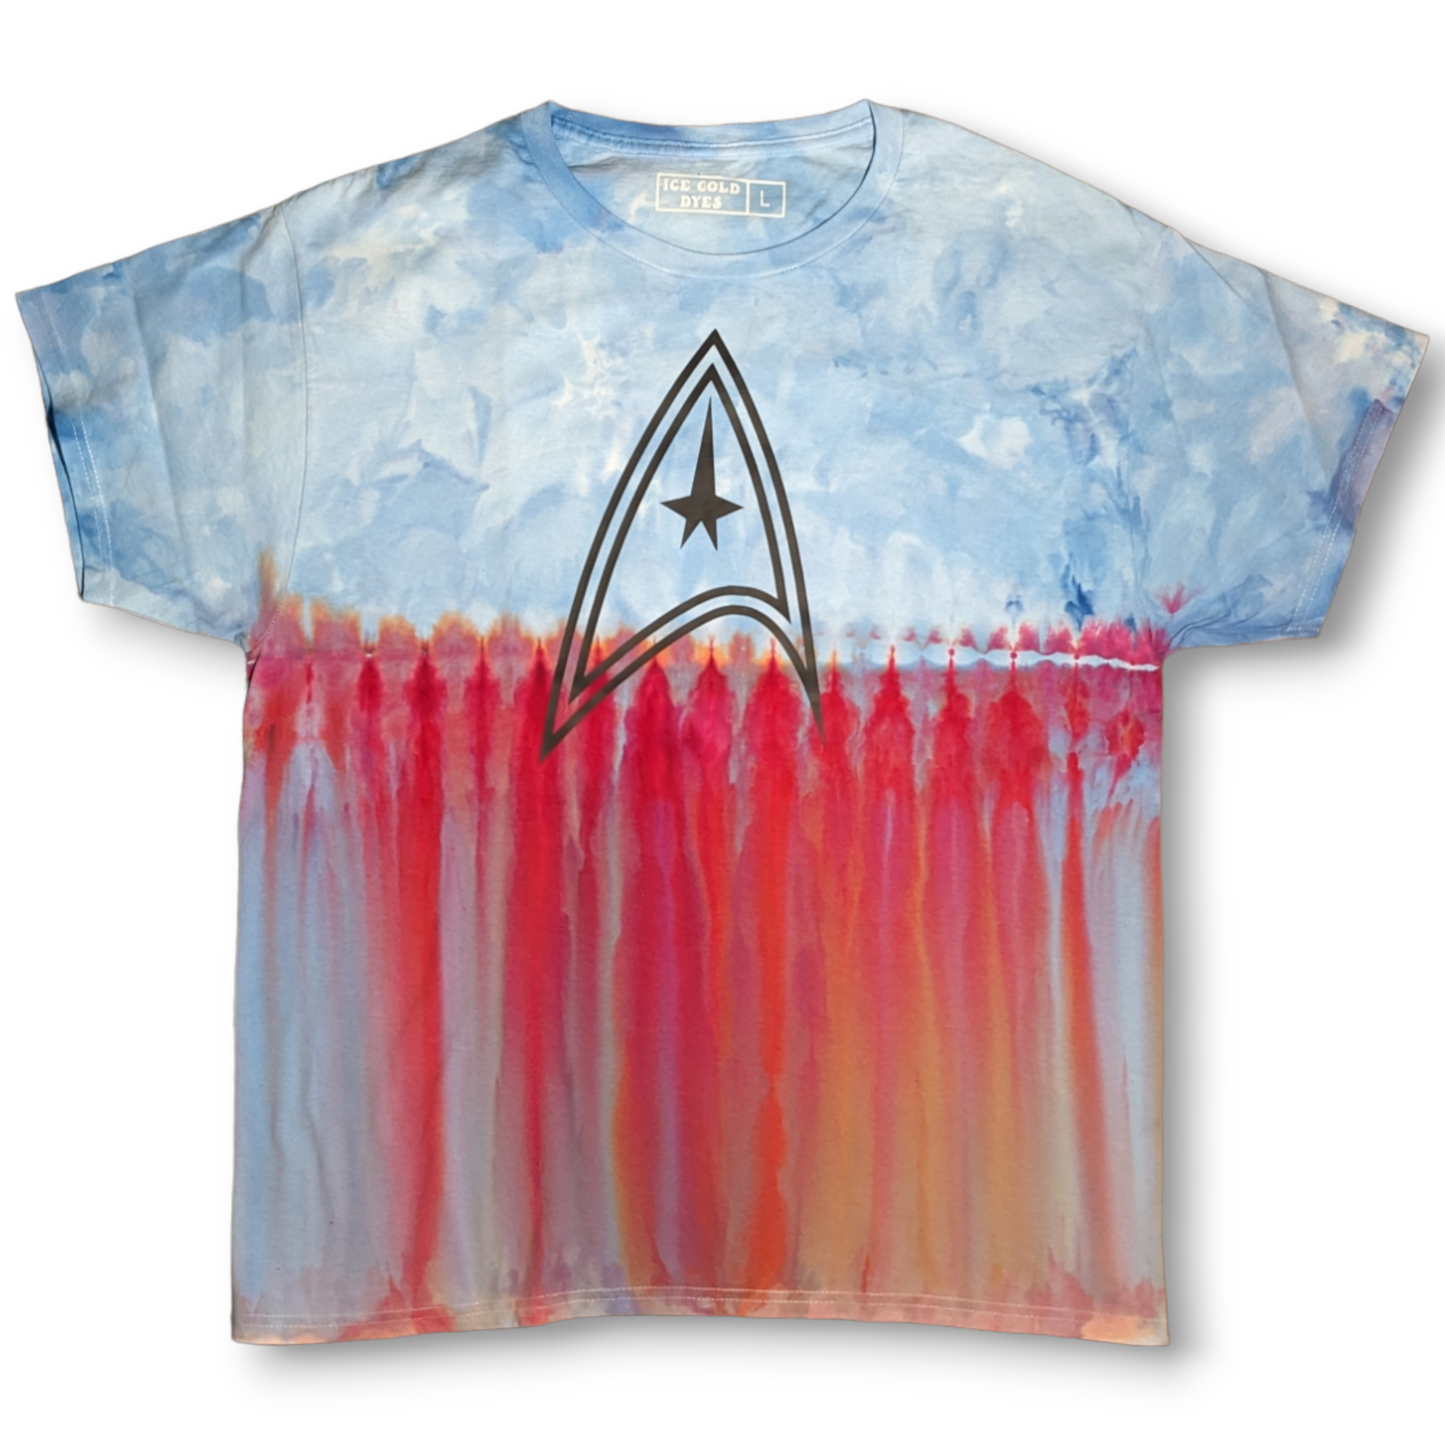 Starfleet Academy- Large Star Trek Inspired Shirt